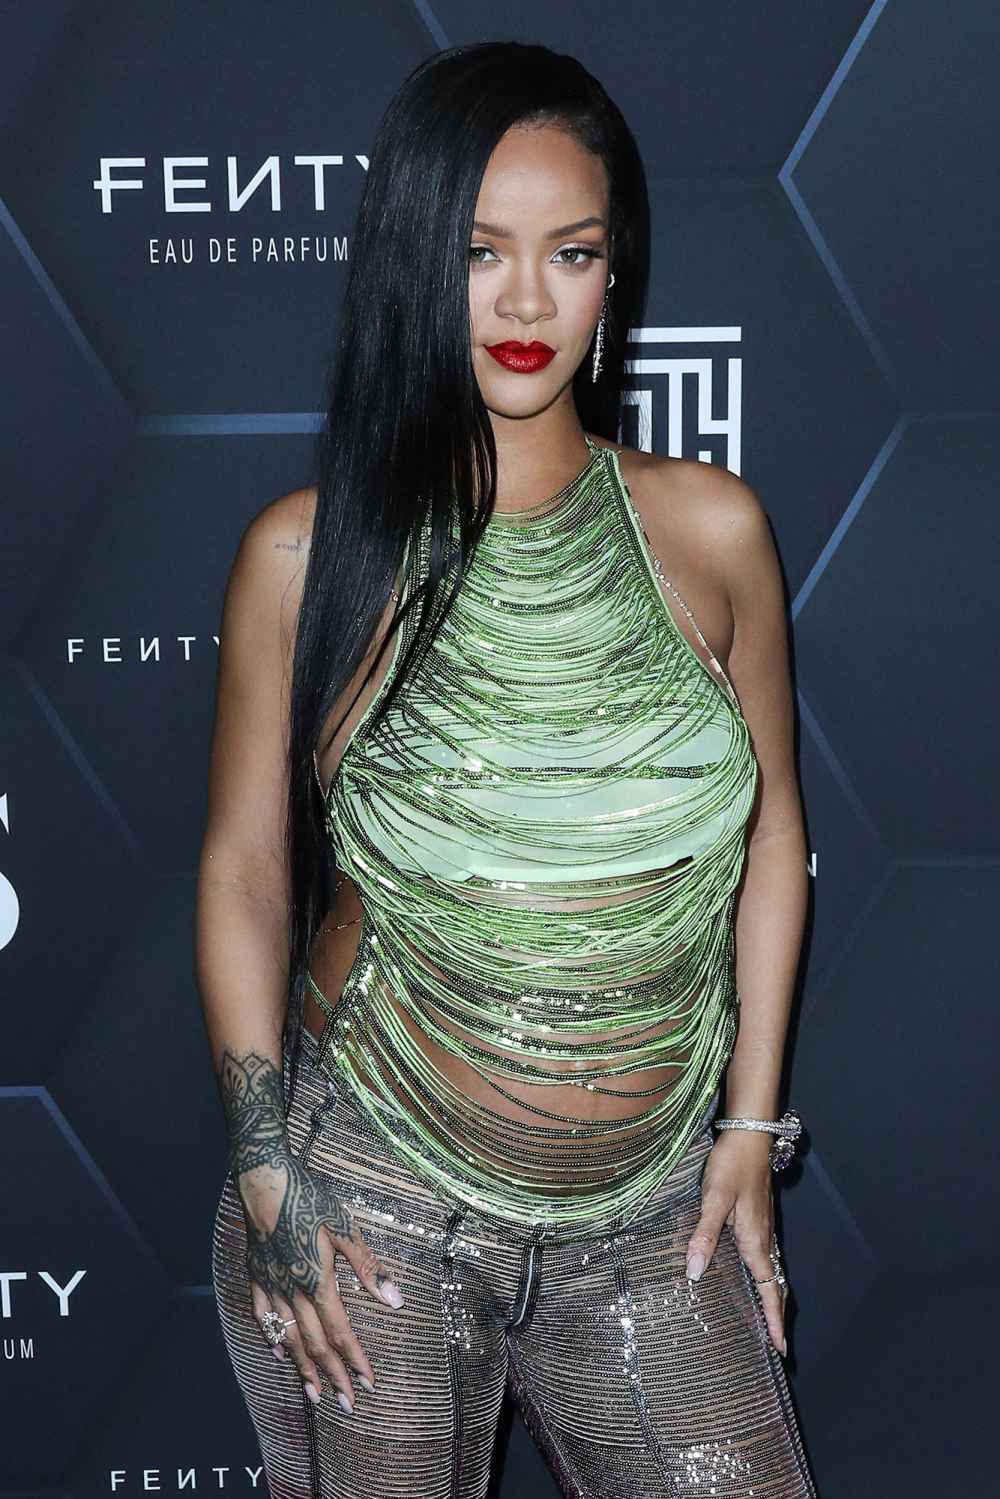 Rihanna Reveals Why She Has Not Released an Album Despite